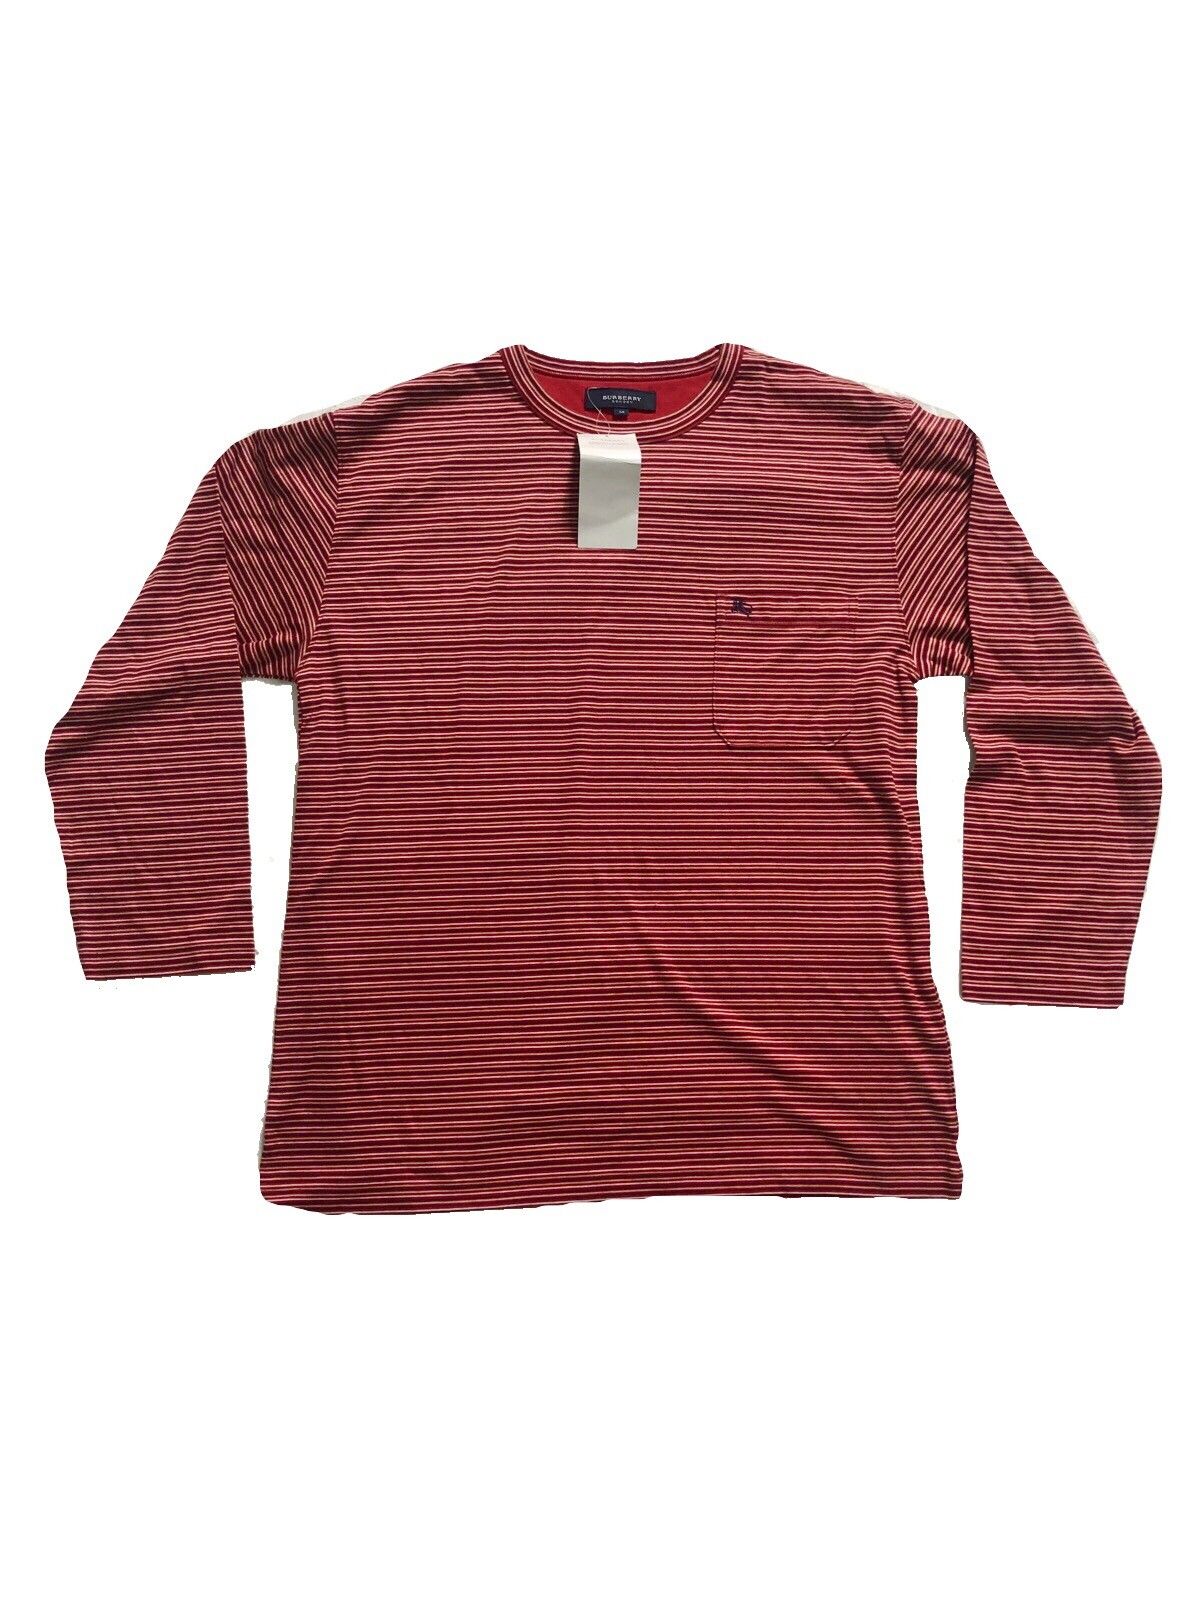 Burberry London Stripes Pocket Tee Long Sleeve Shirt - 1